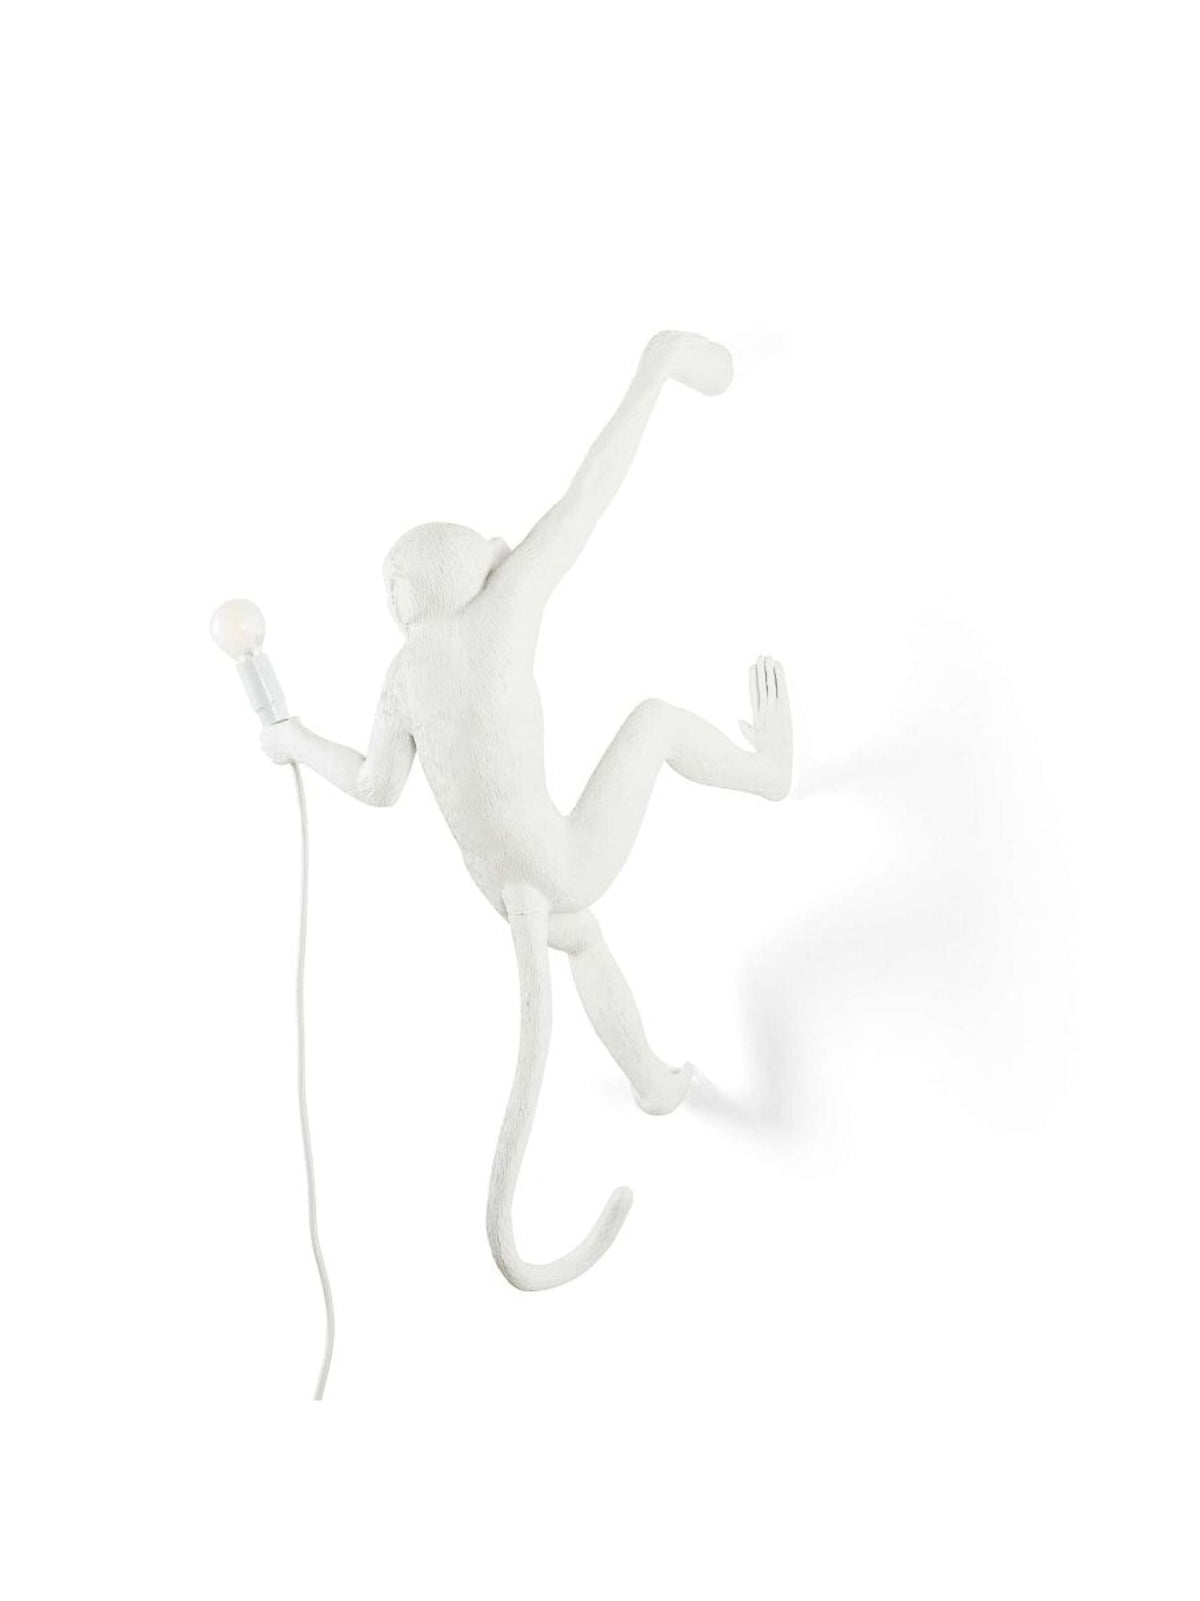 Monkey White Hanging Lamp Right - Seletti Seletti Seletti 